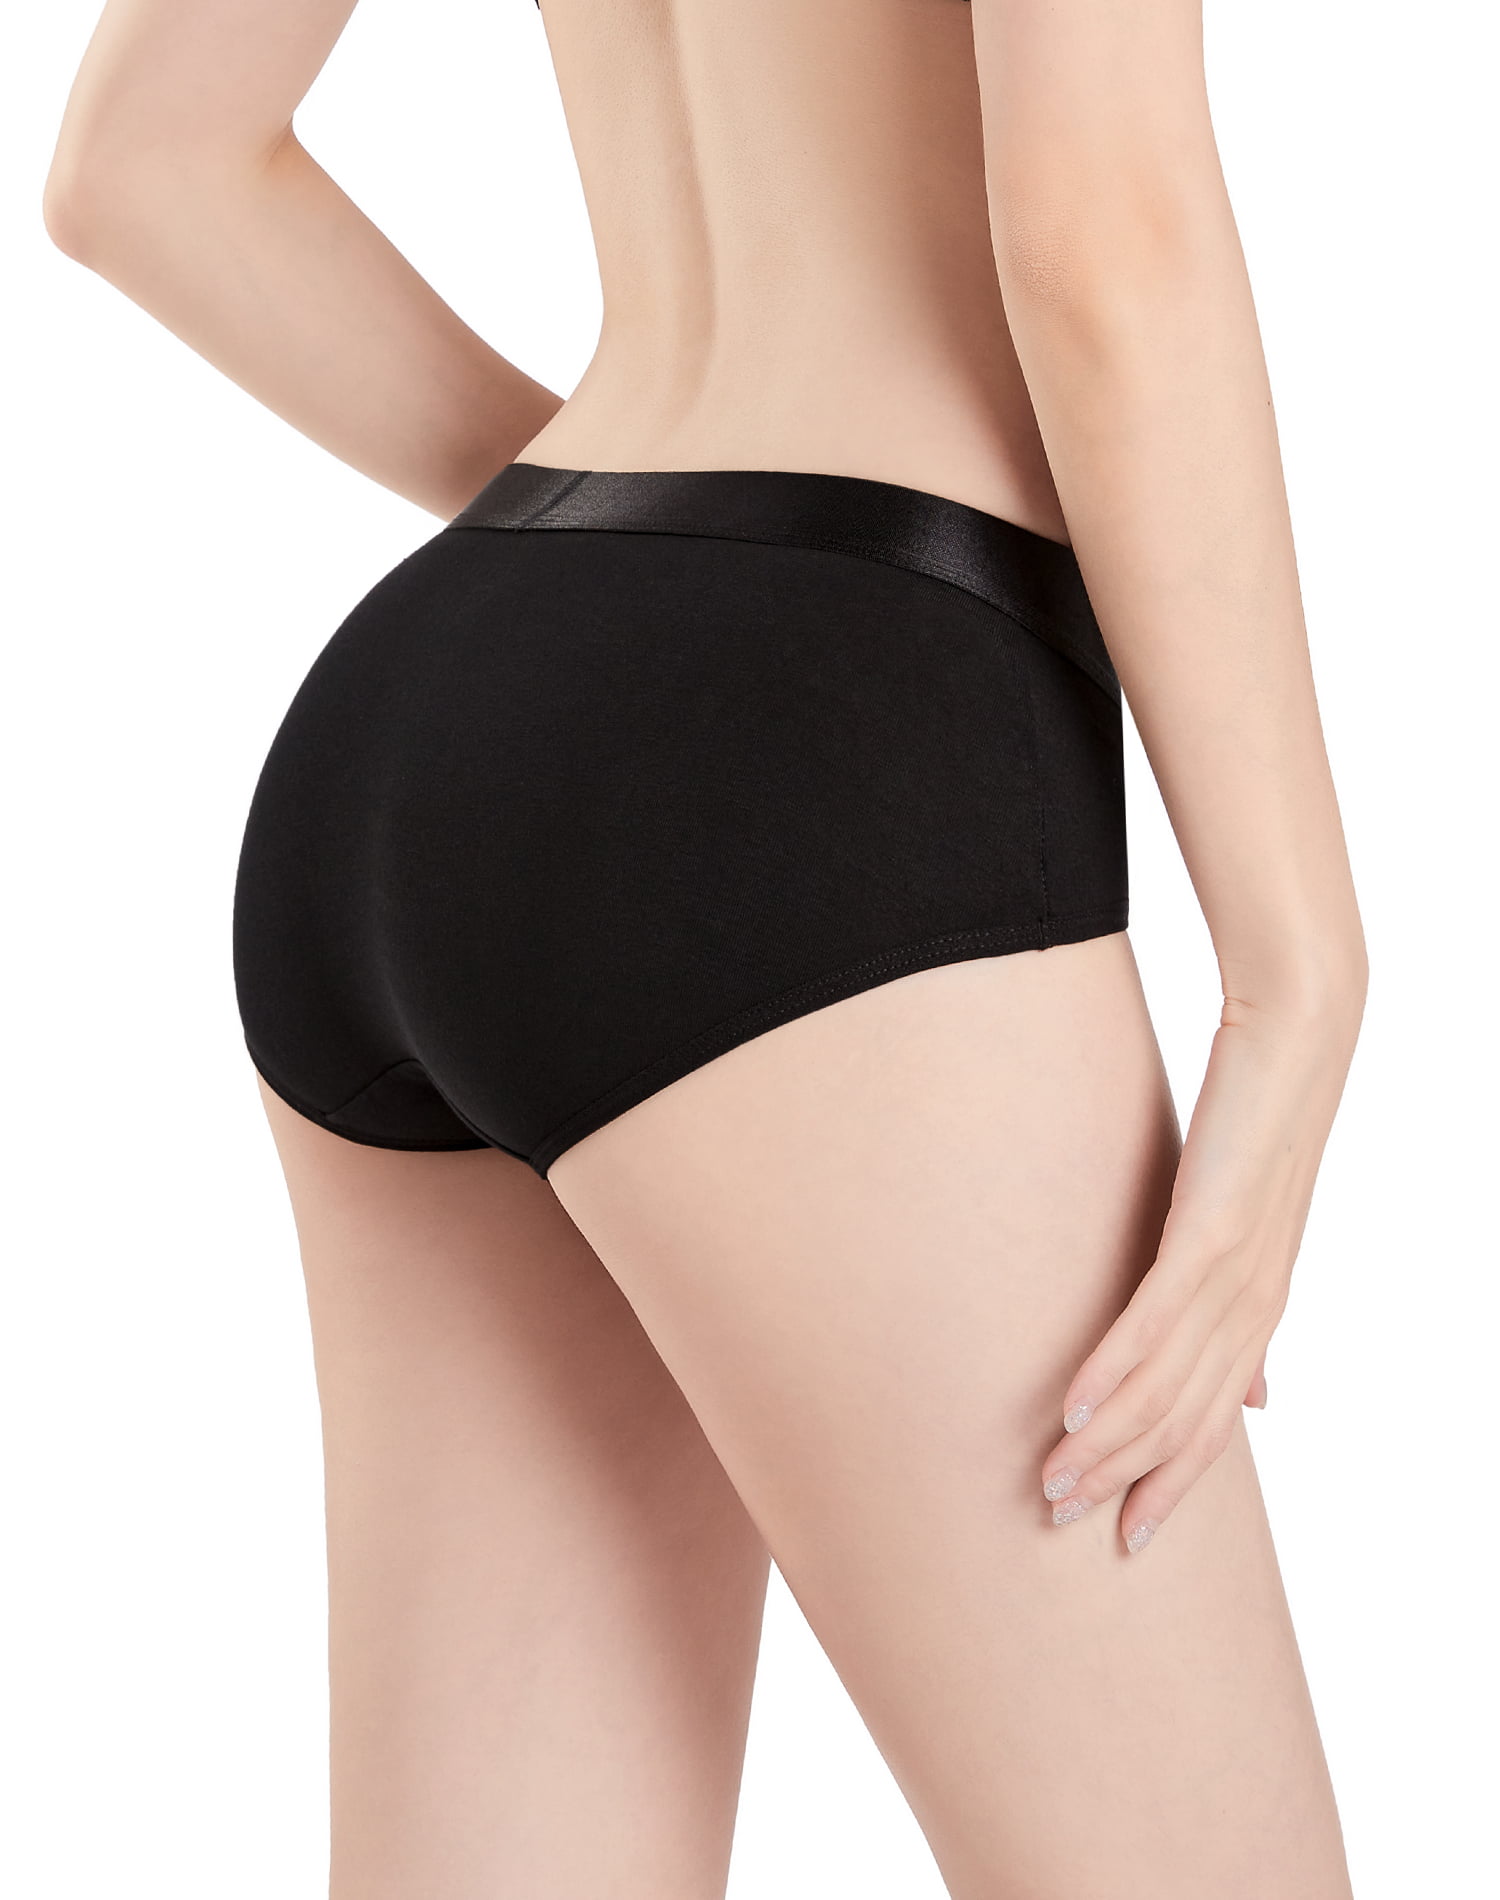 INNERSY Teen Girls'Underwear Cotton Briefs Wide Waistband Sporty Panties 6  Pack (XL(14-16 yrs), Dark)